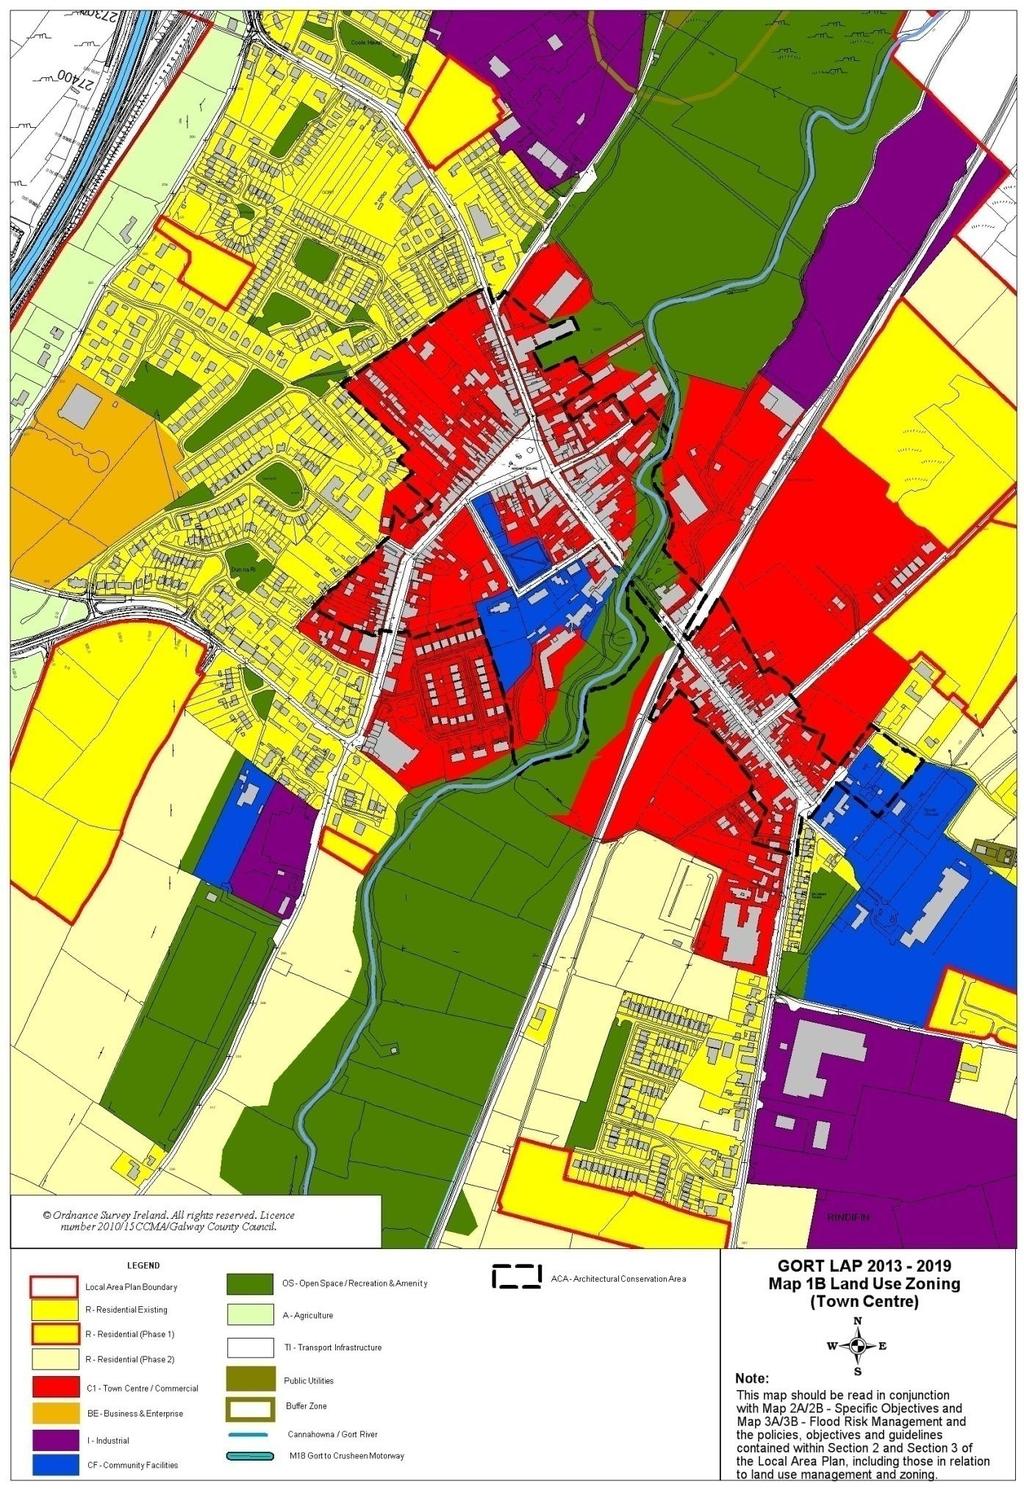 4.2 Map 1B Land Use